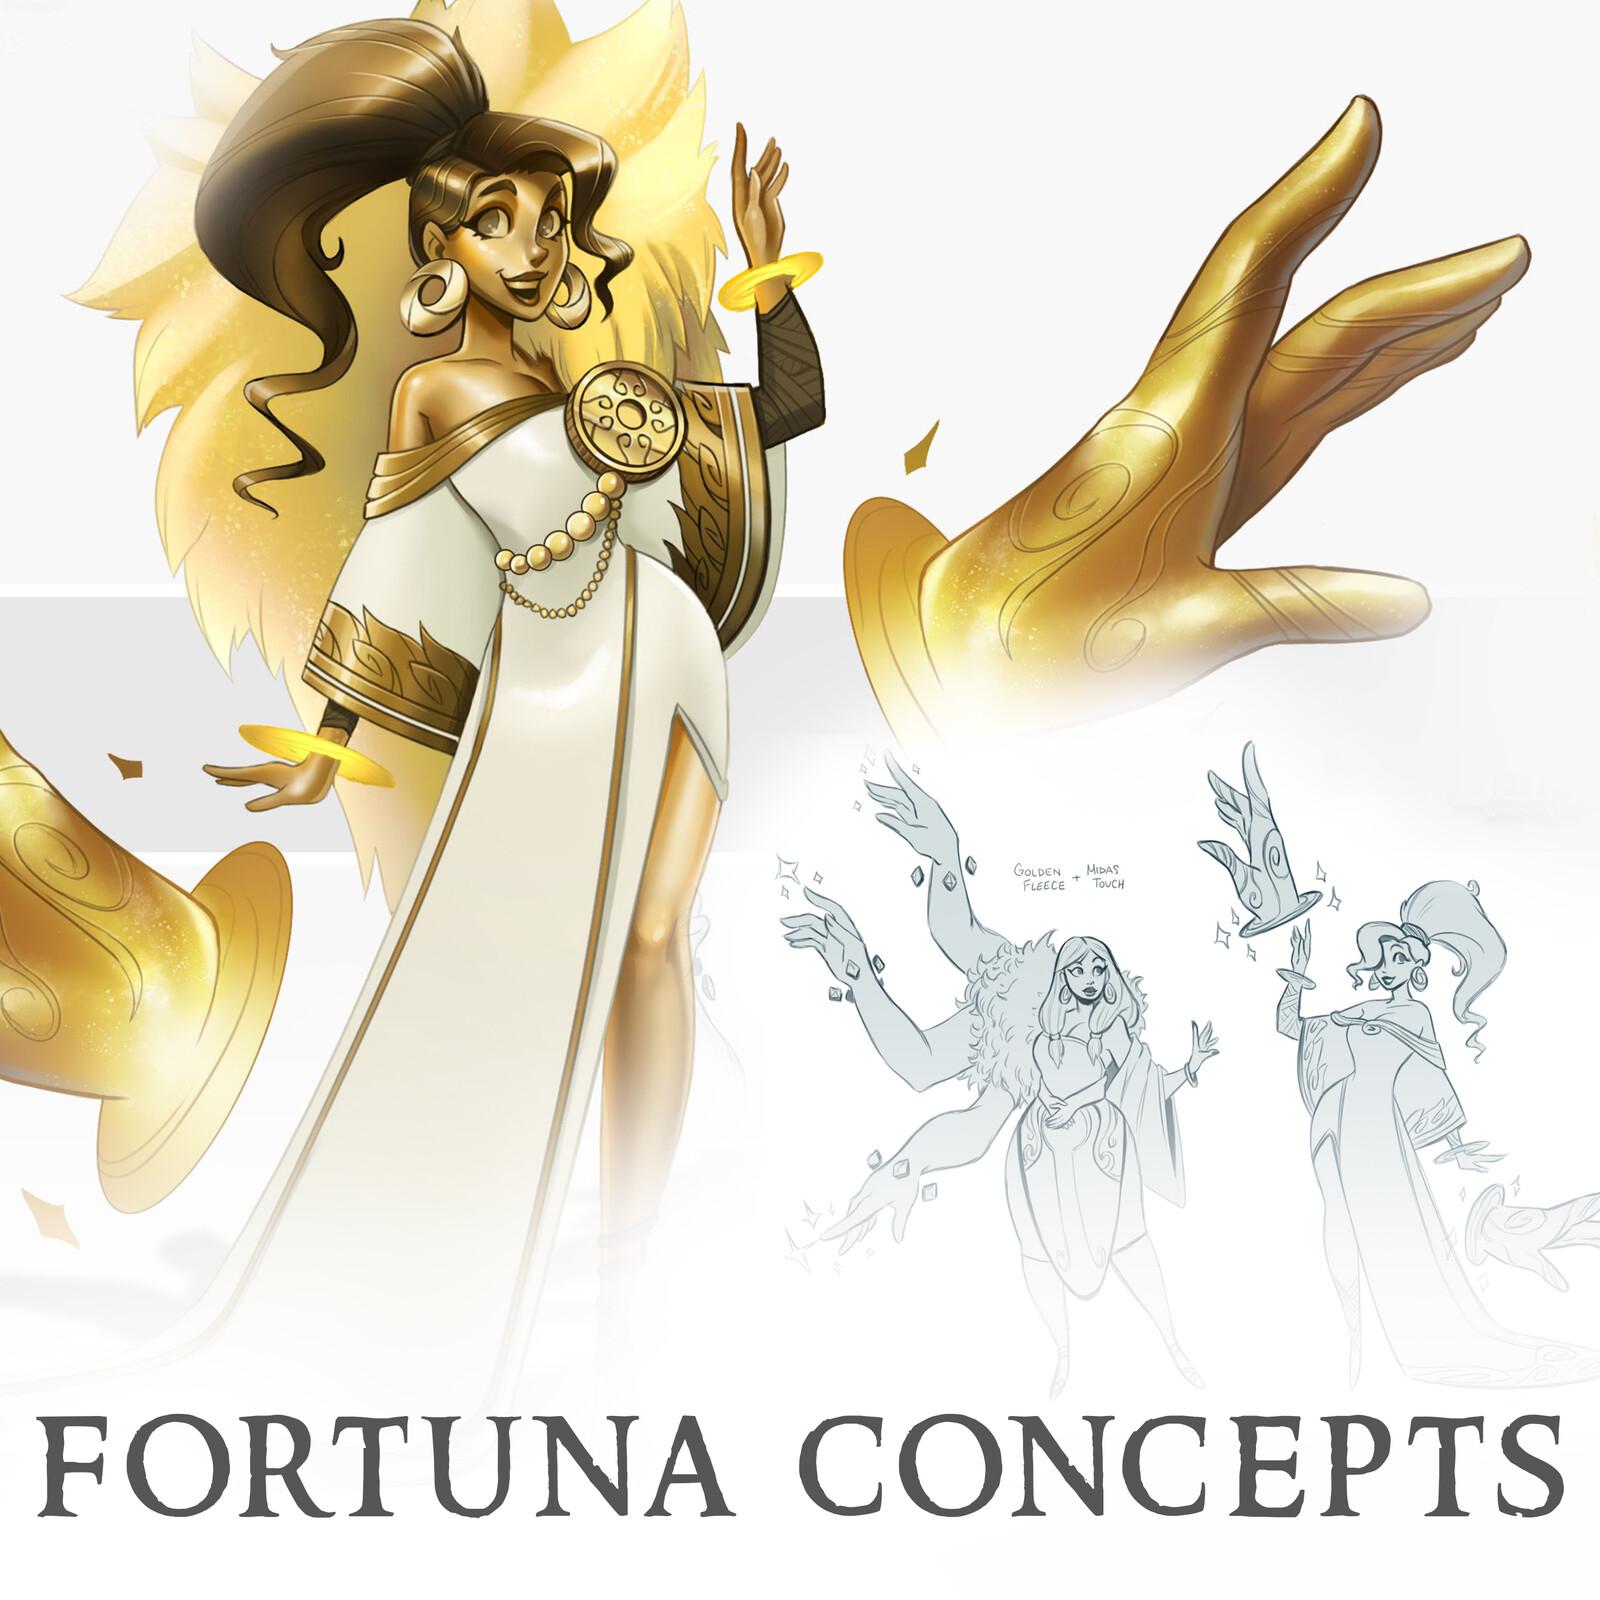 Fortuna, Goddess of Fortune